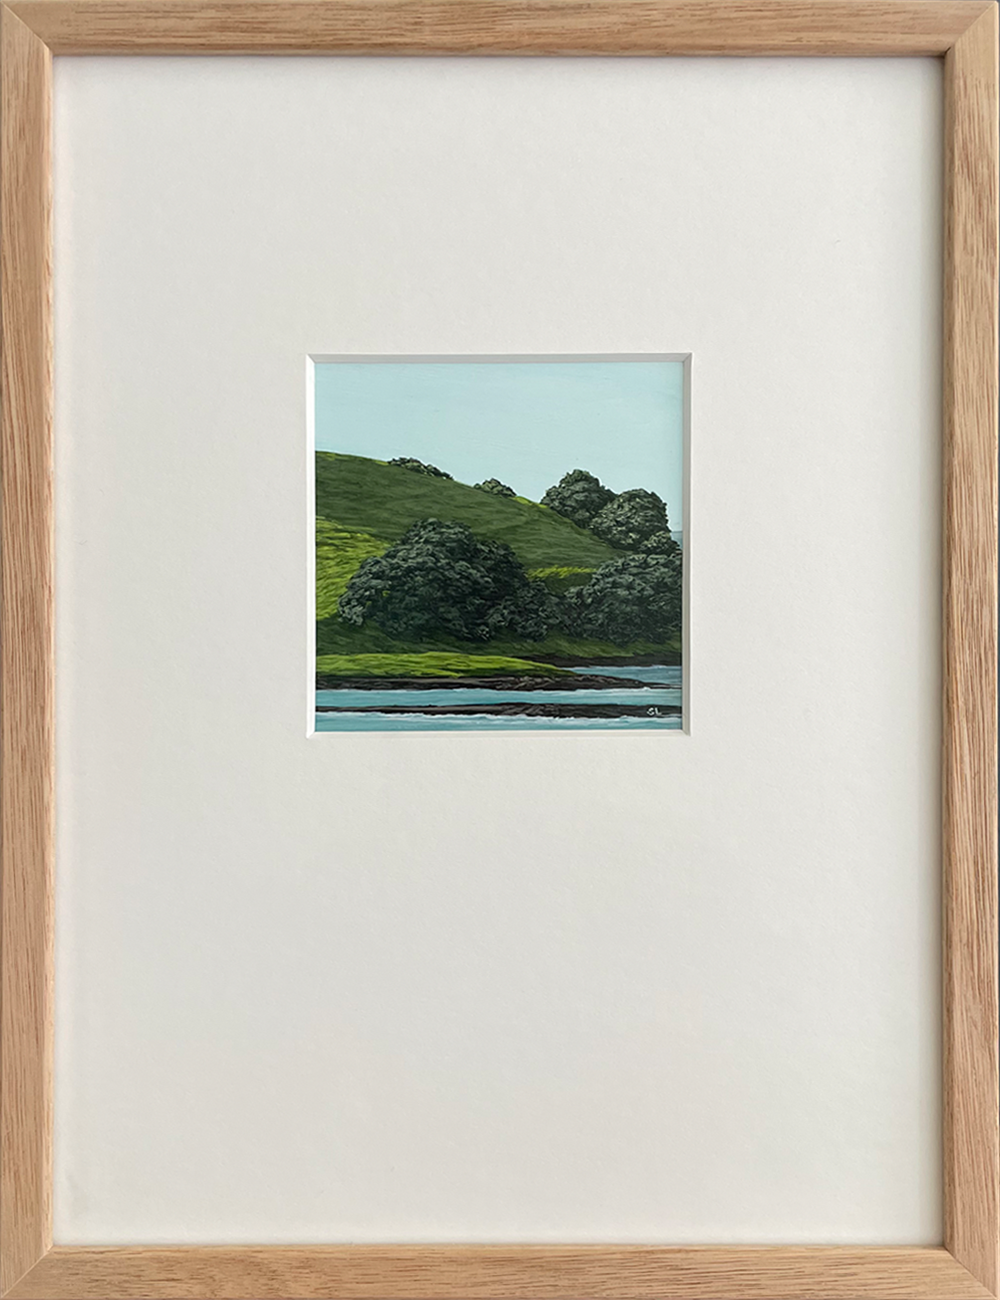 Browns Island Study. Acrylic on board, framed. Sara Langdon